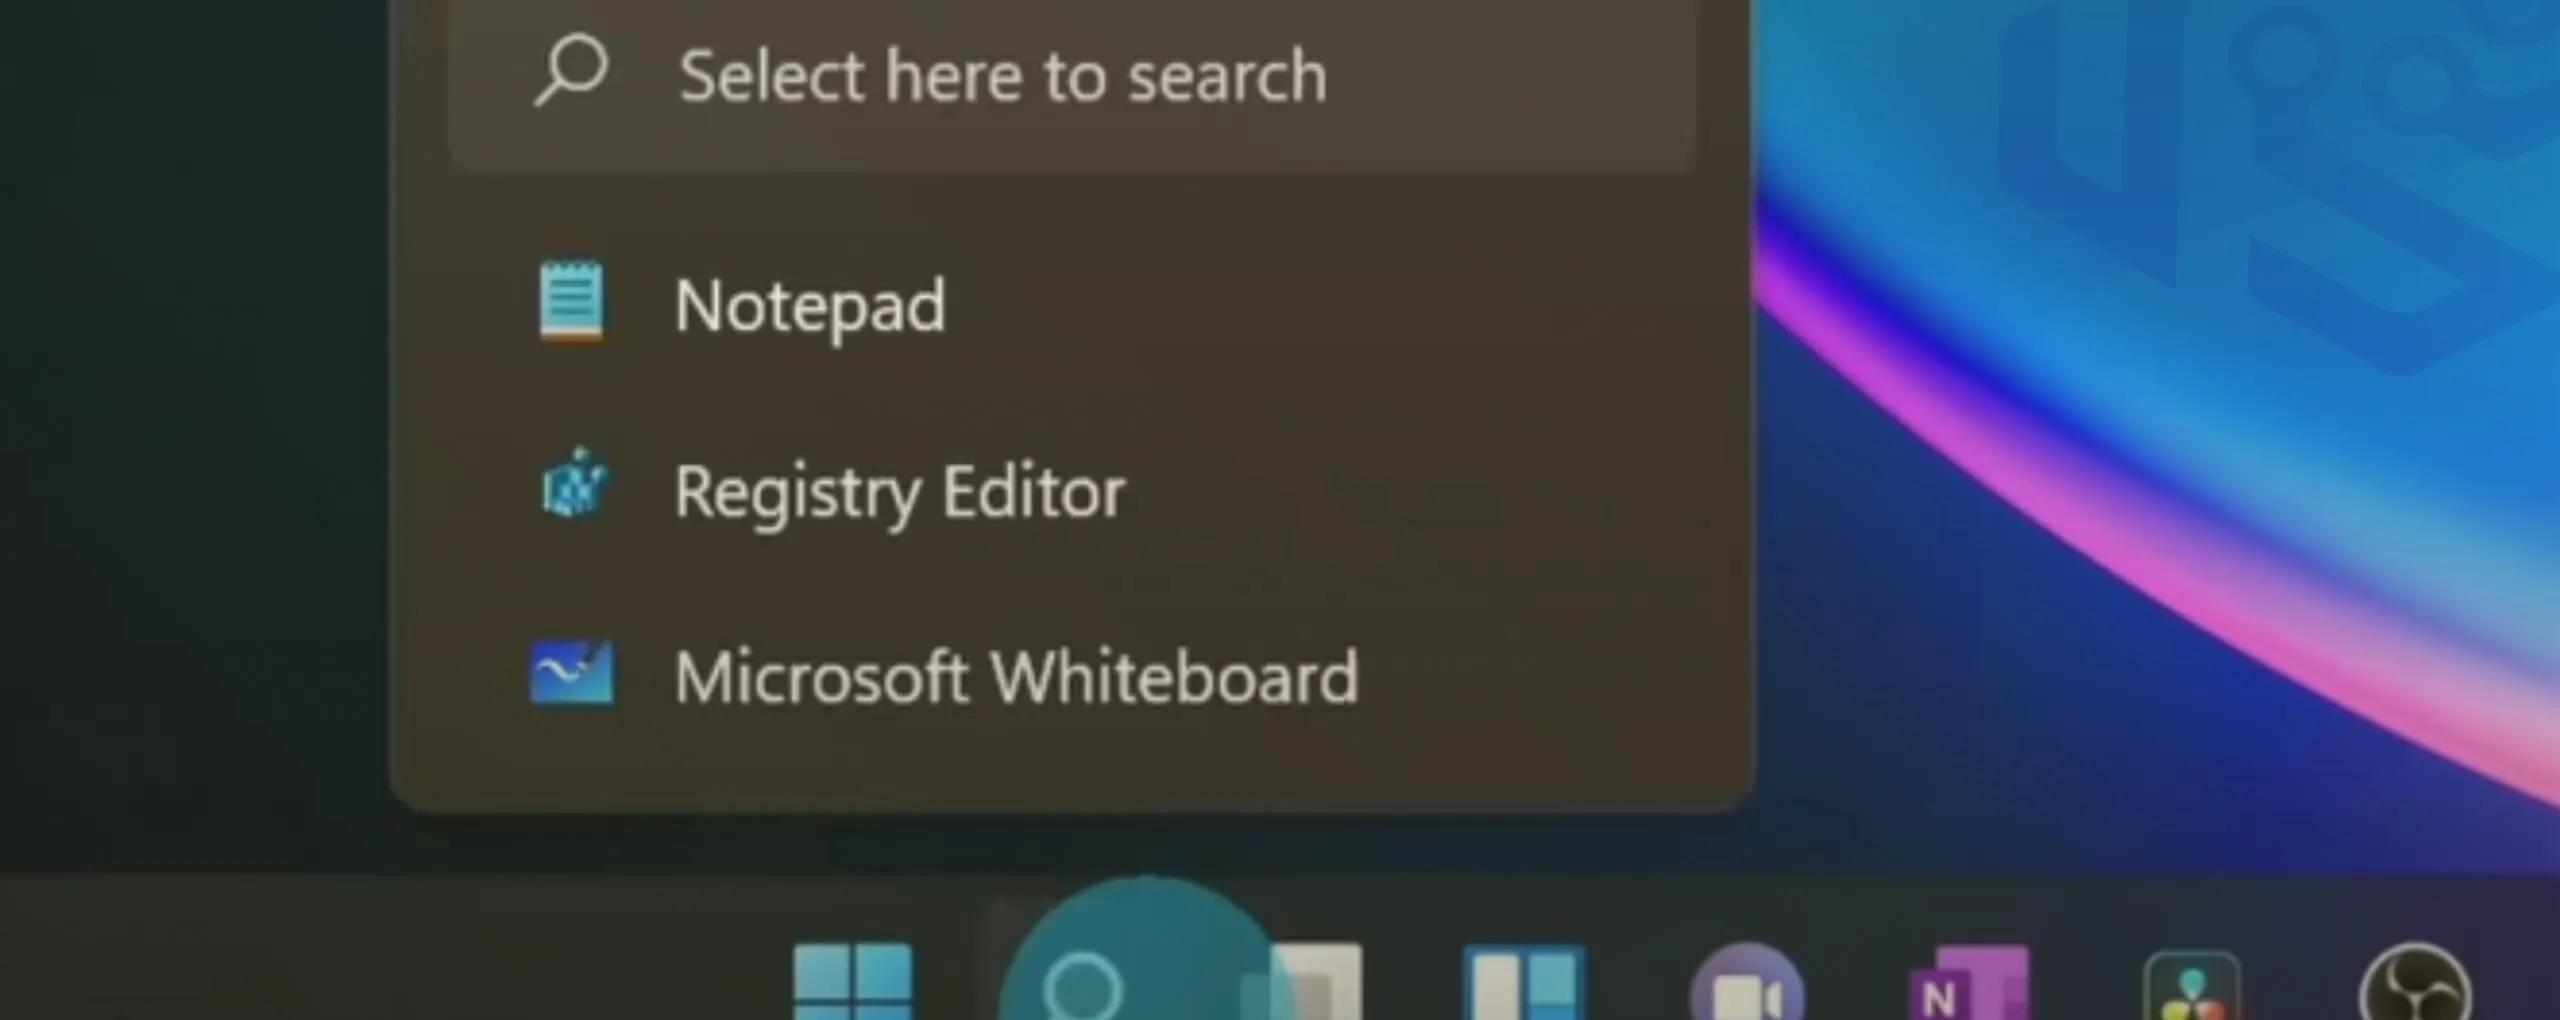 Windows task bar search panel 1